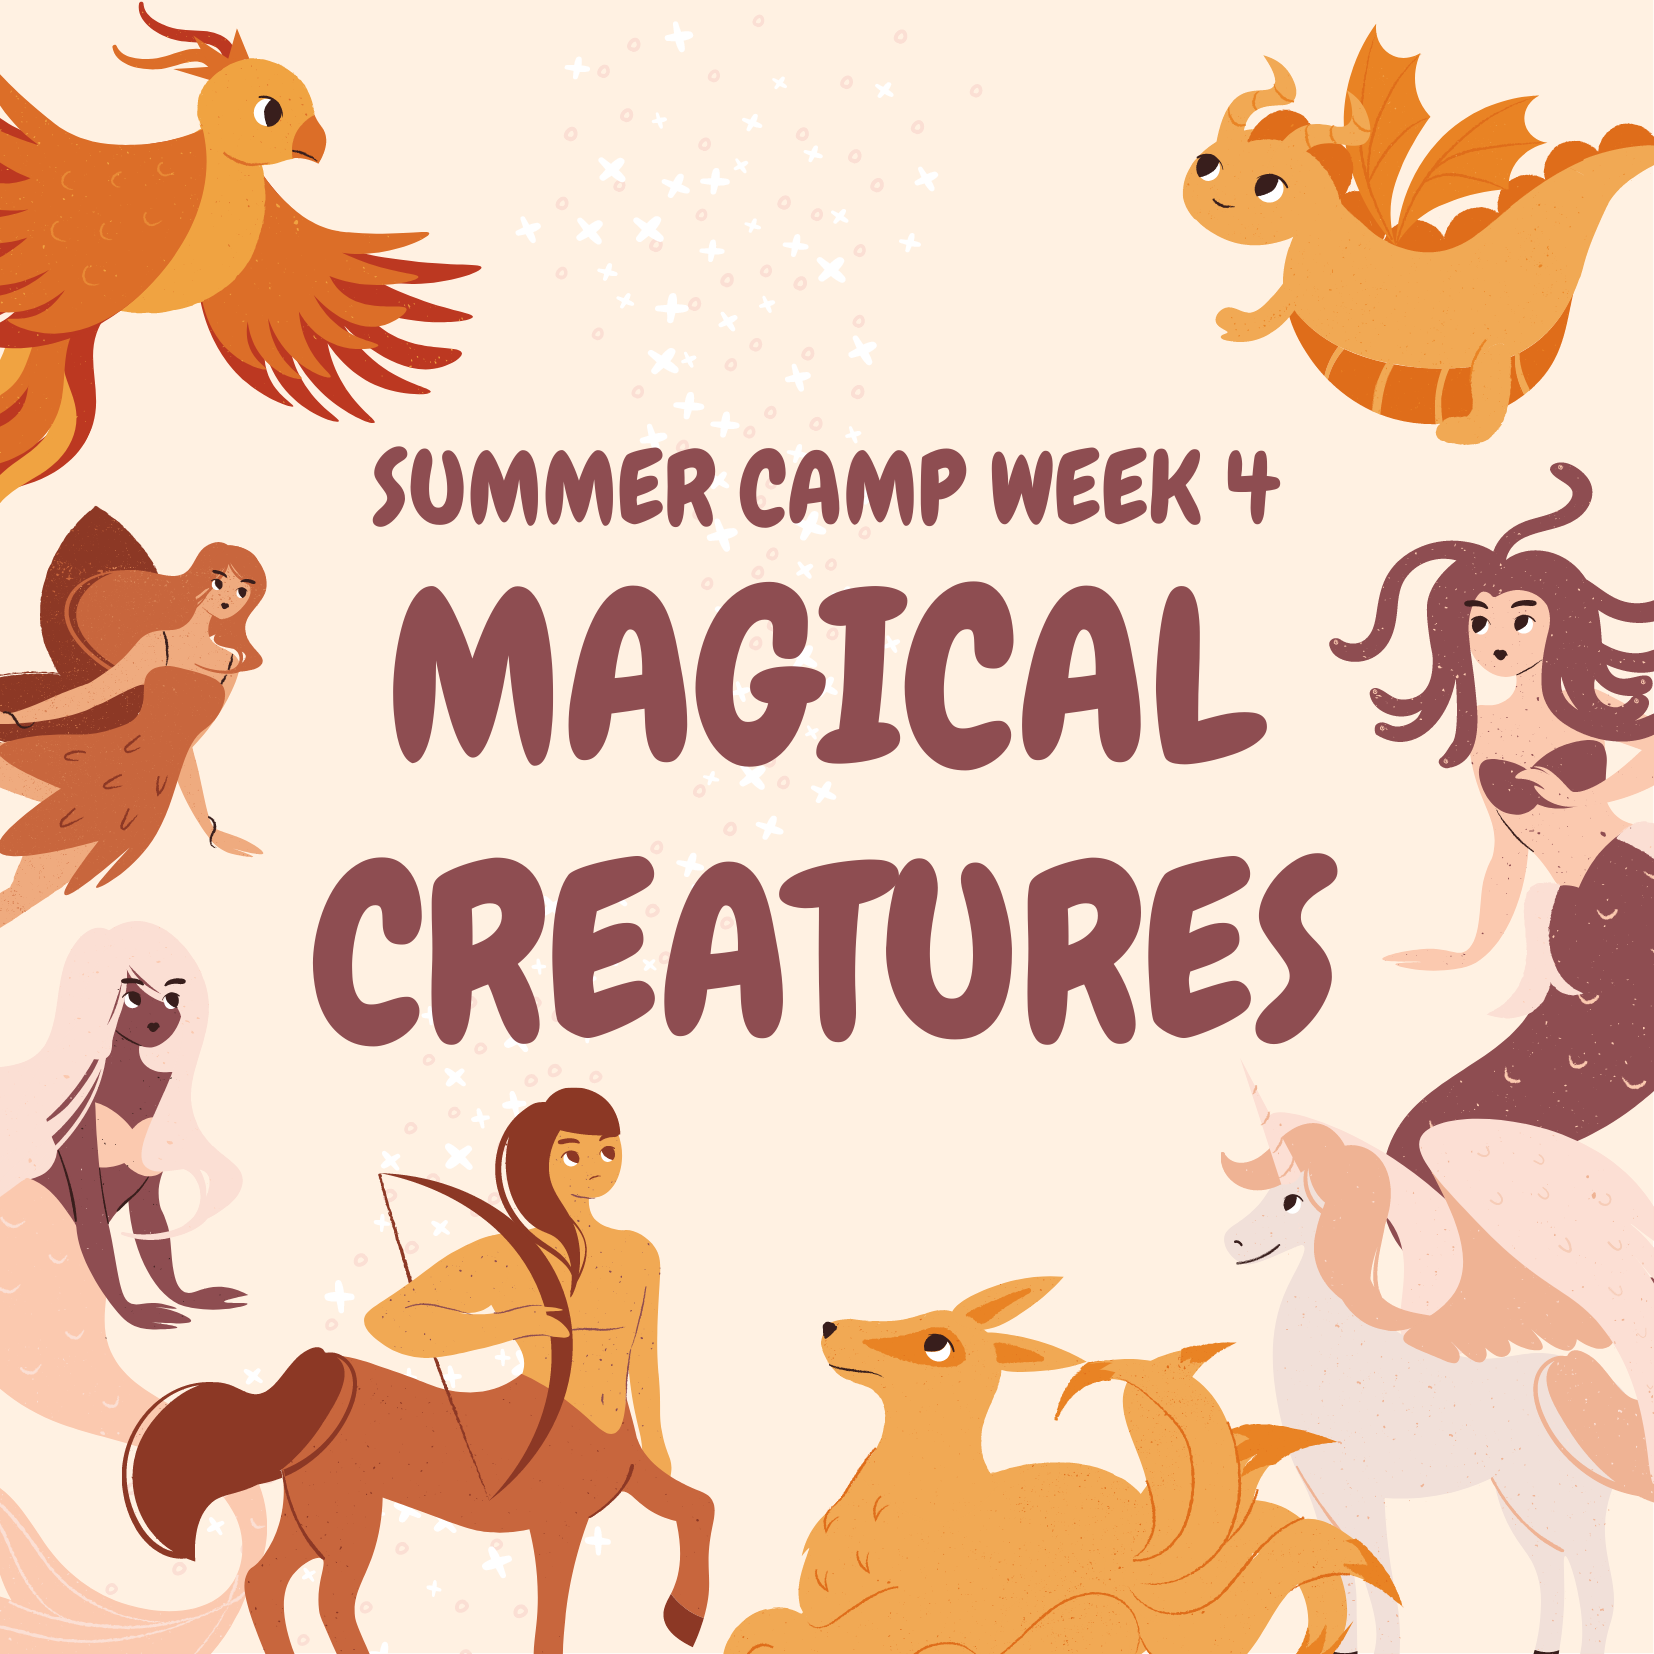 Week Four (7/18 - 7/22): MAGICAL CREATURES